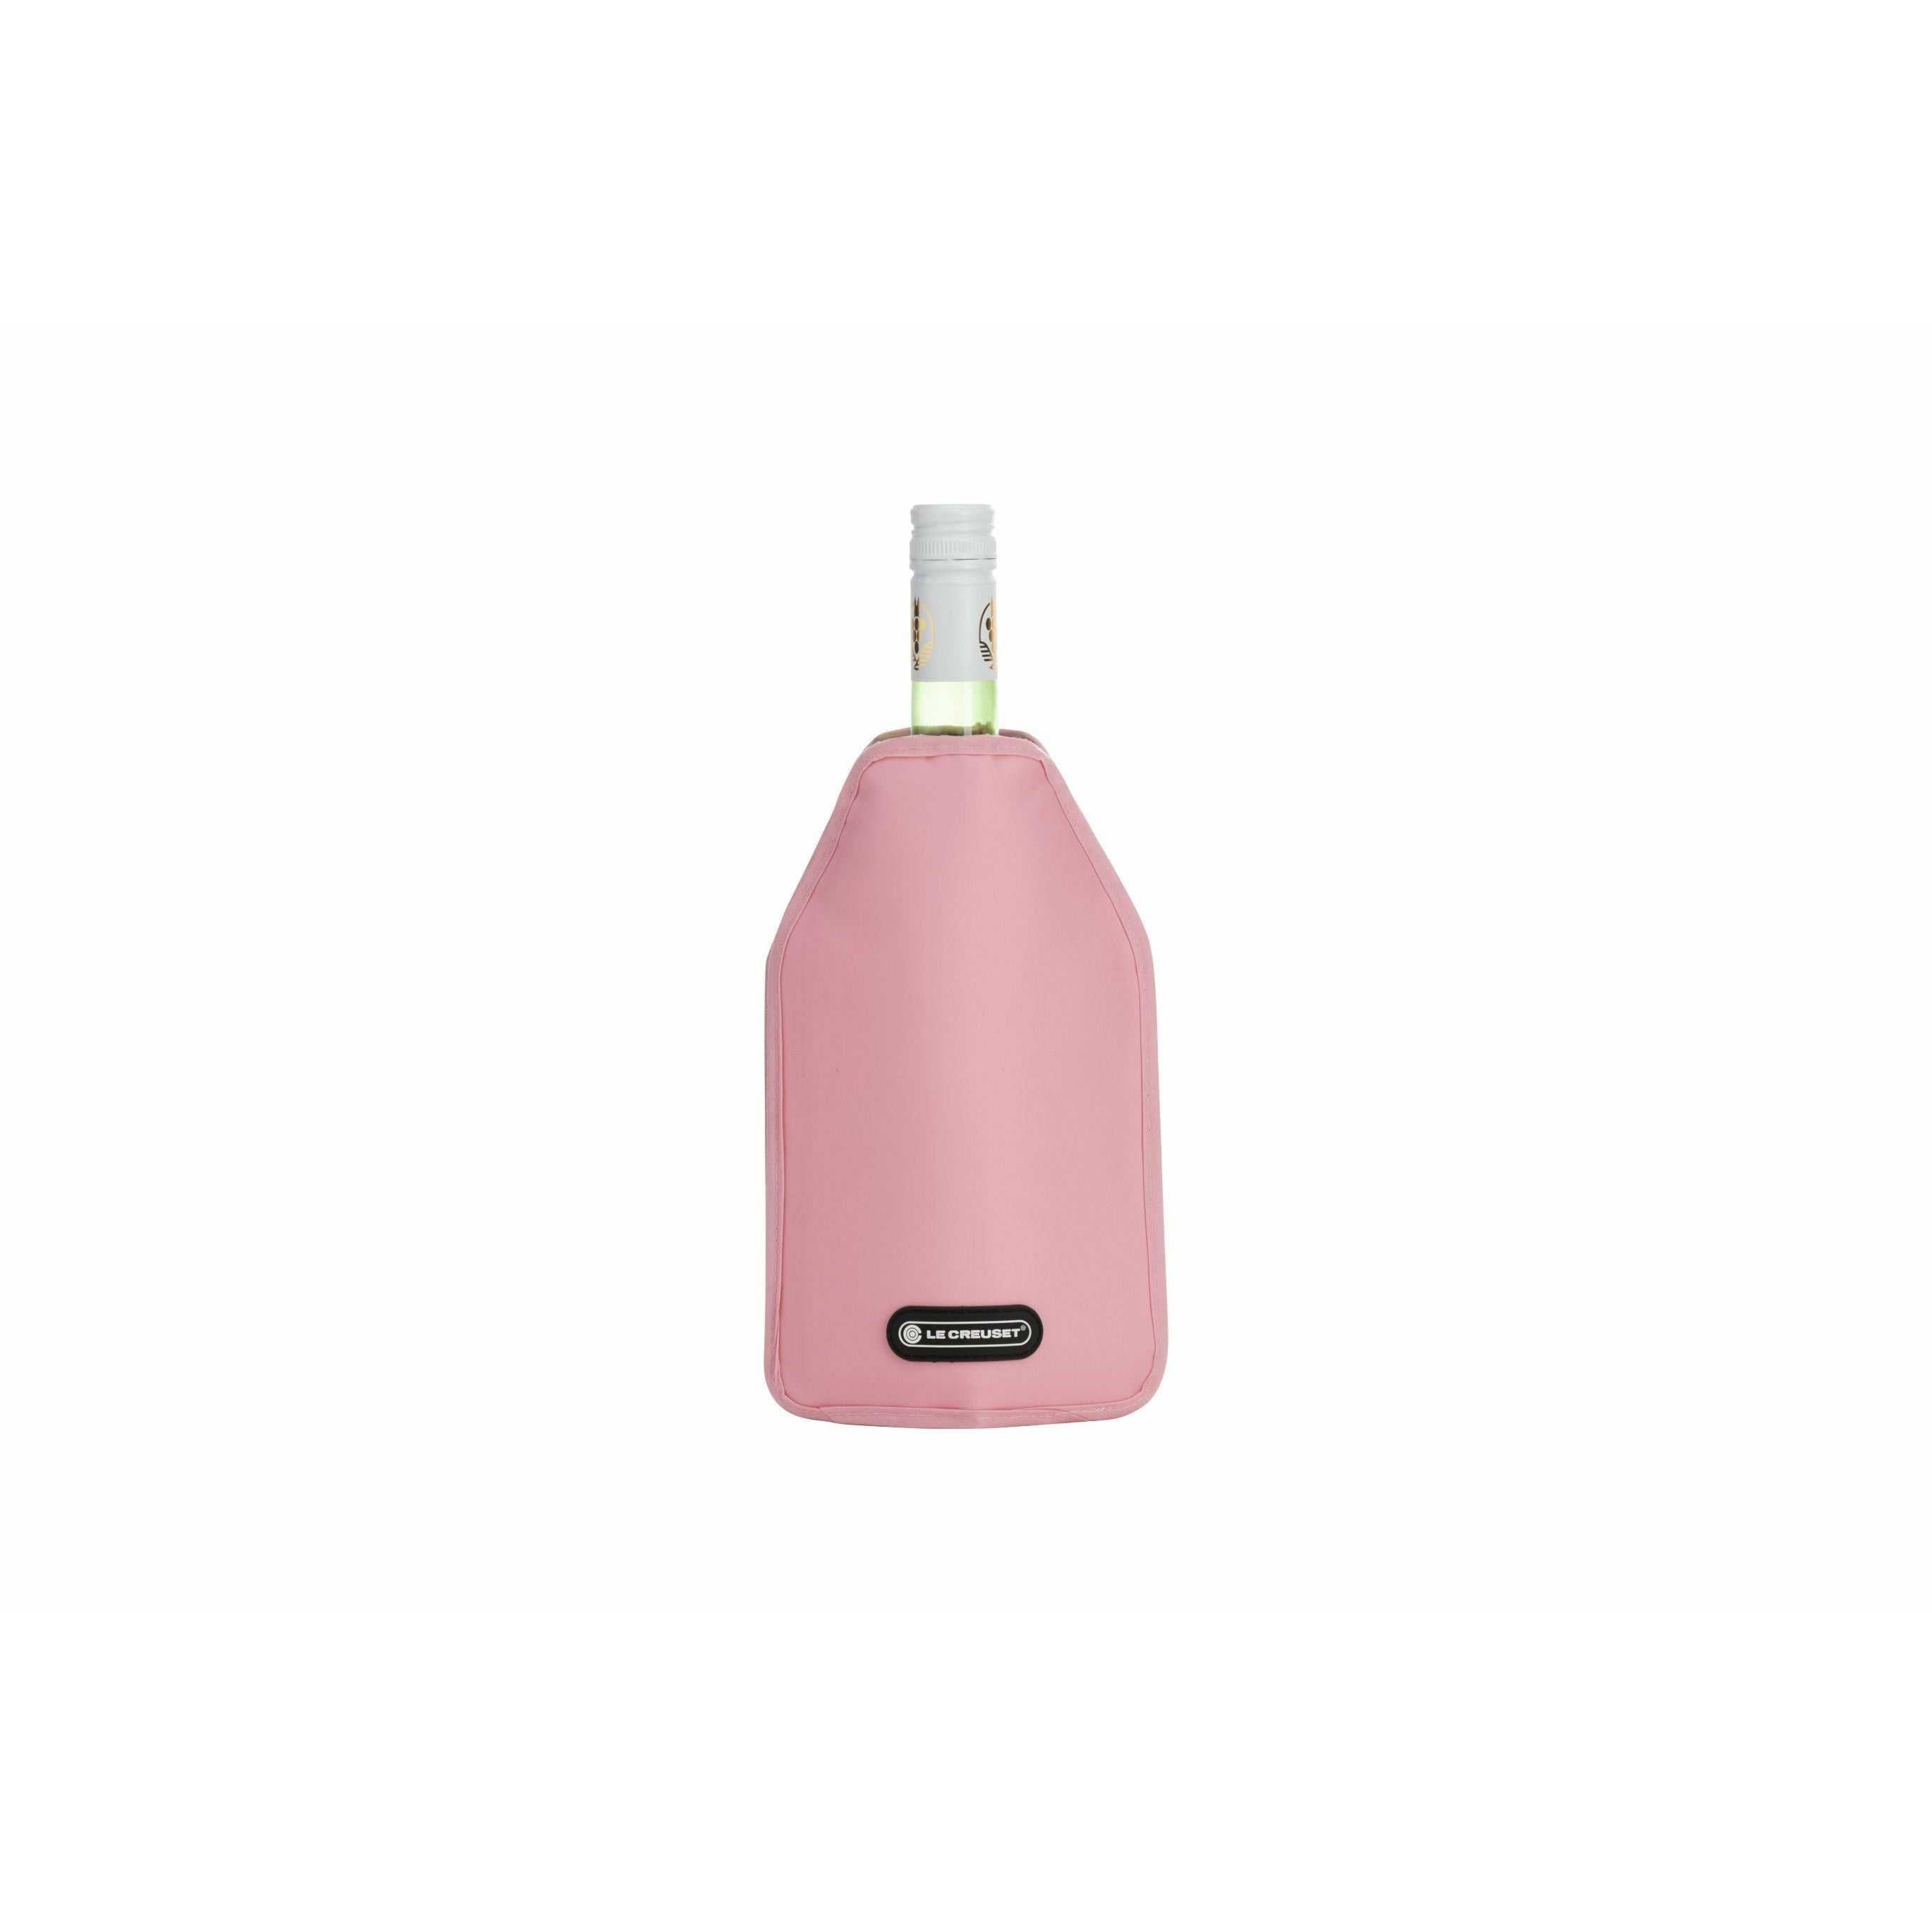 Le Creuset Wine Cooler WA 126, concha rosa